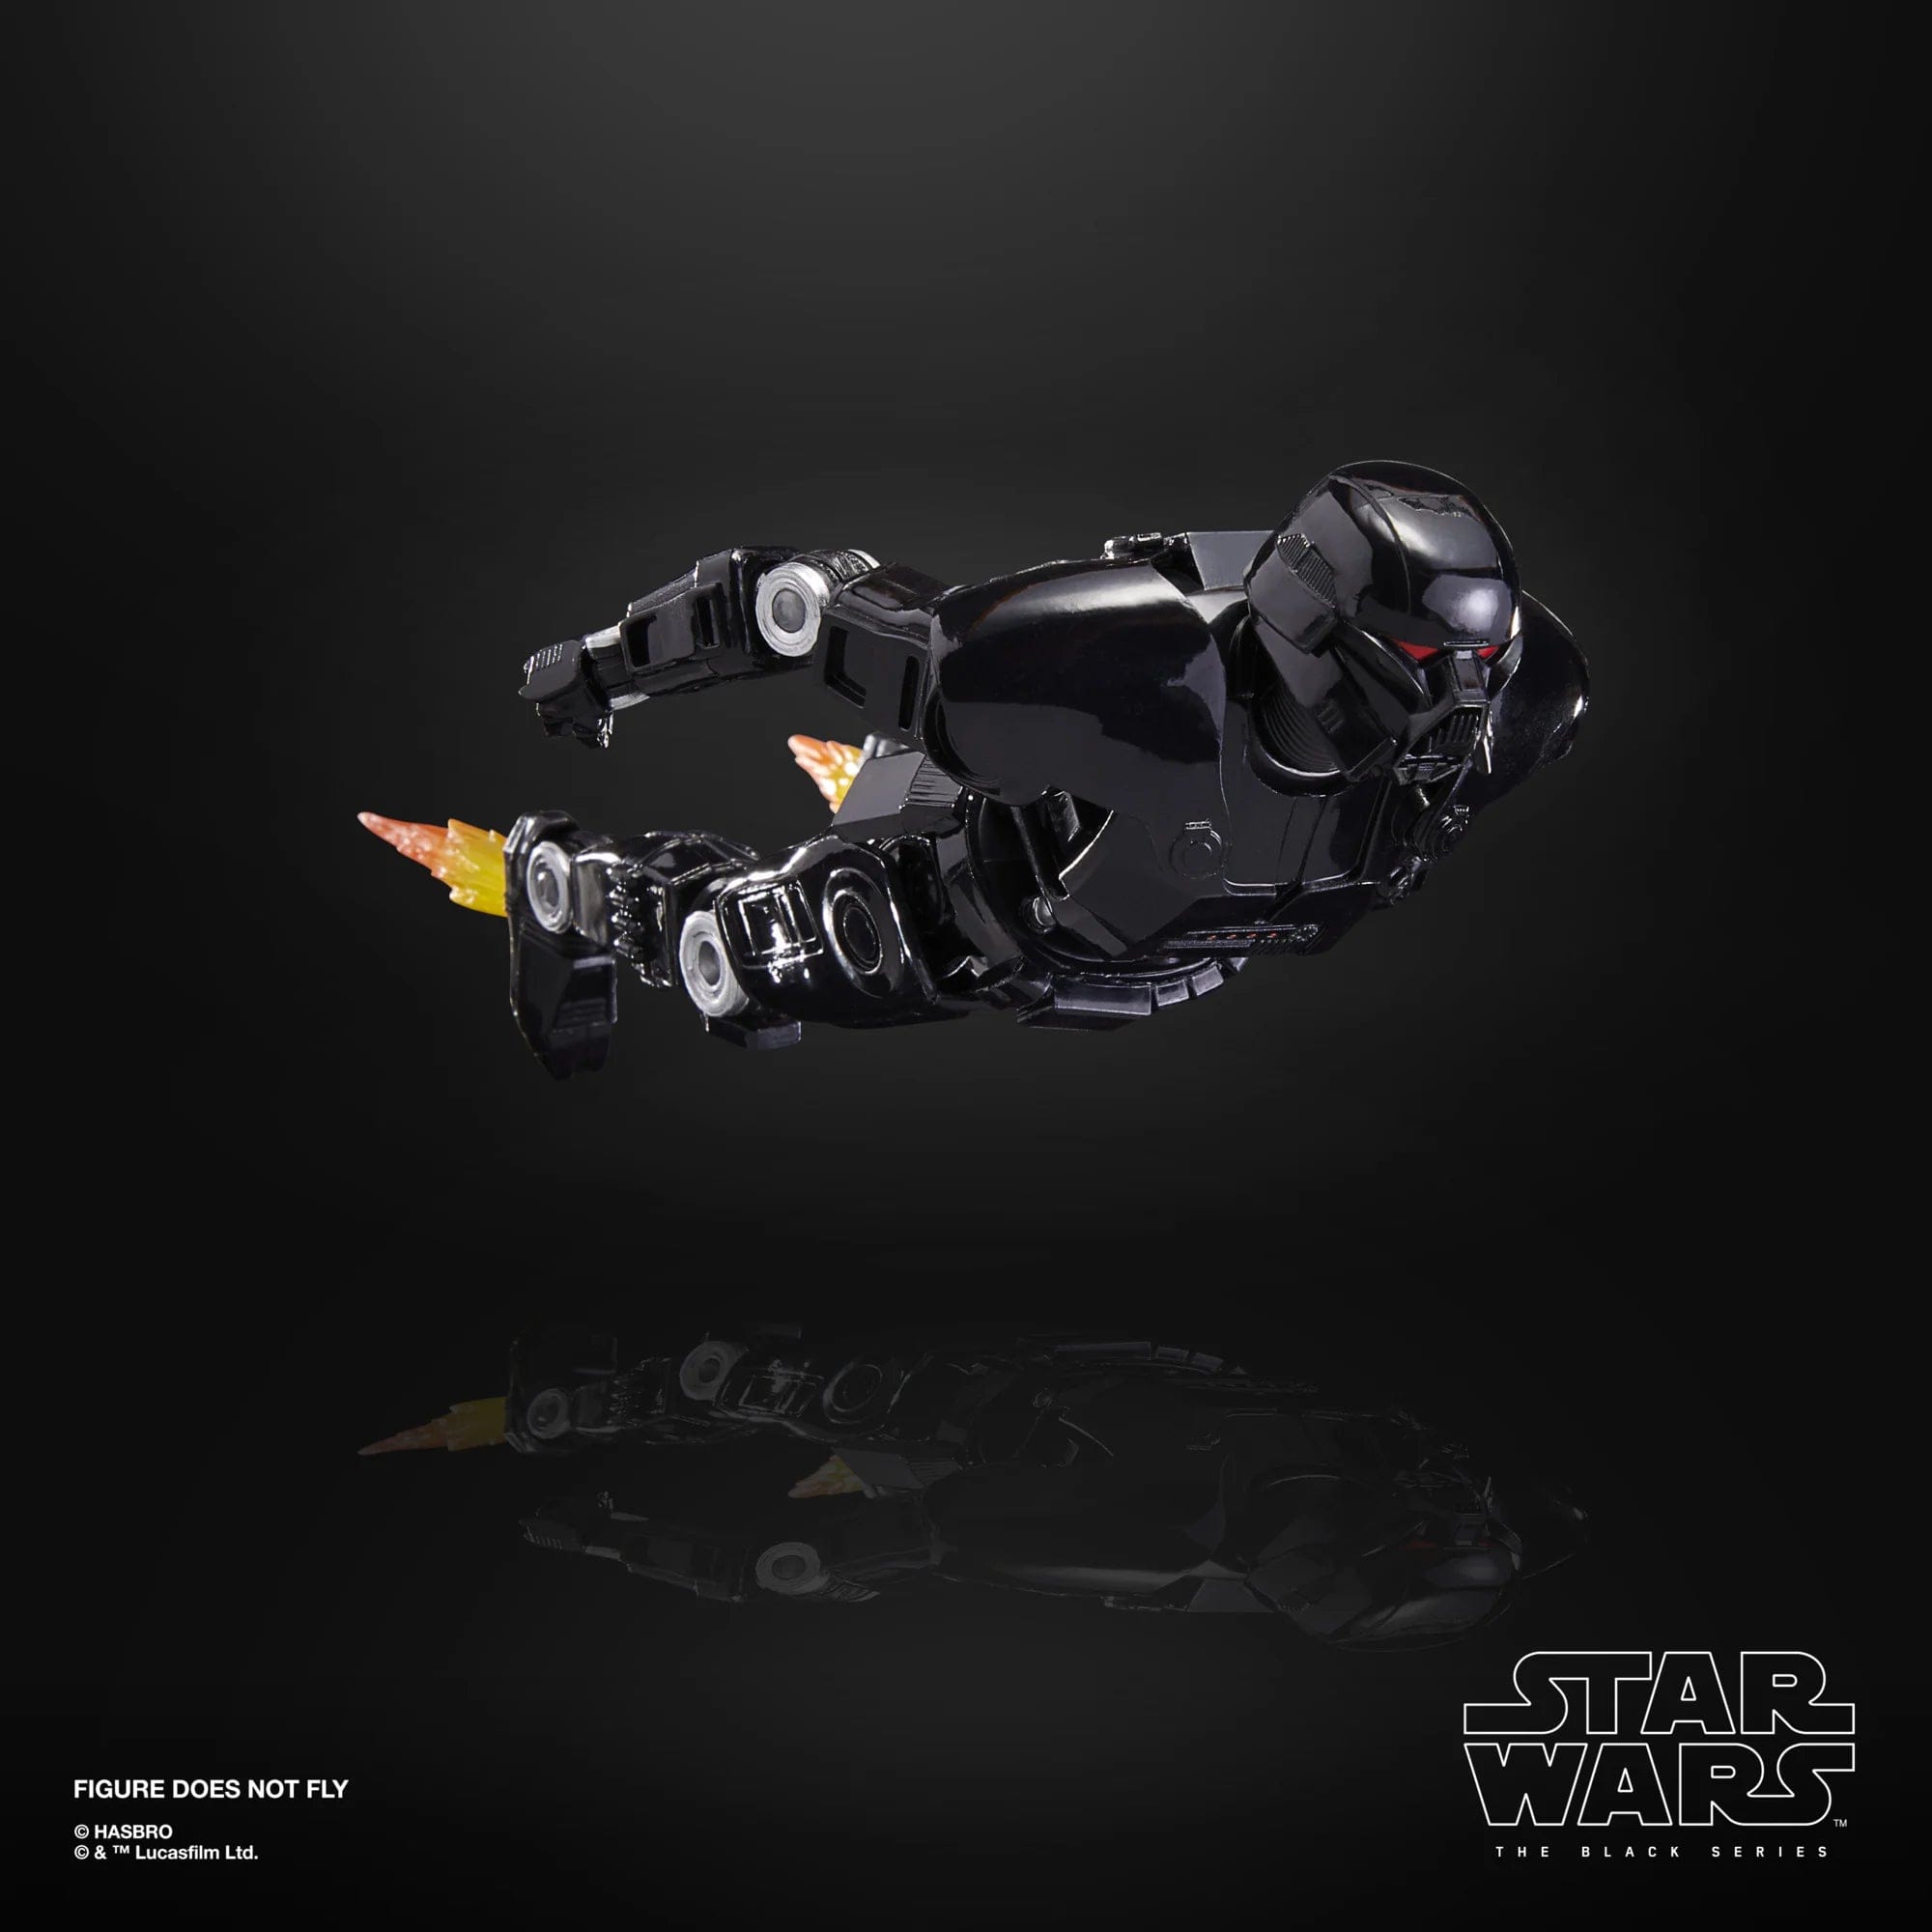 Hasbro Star Wars The Black Series The Mandalorian Dark Trooper Deluxe Action Figure